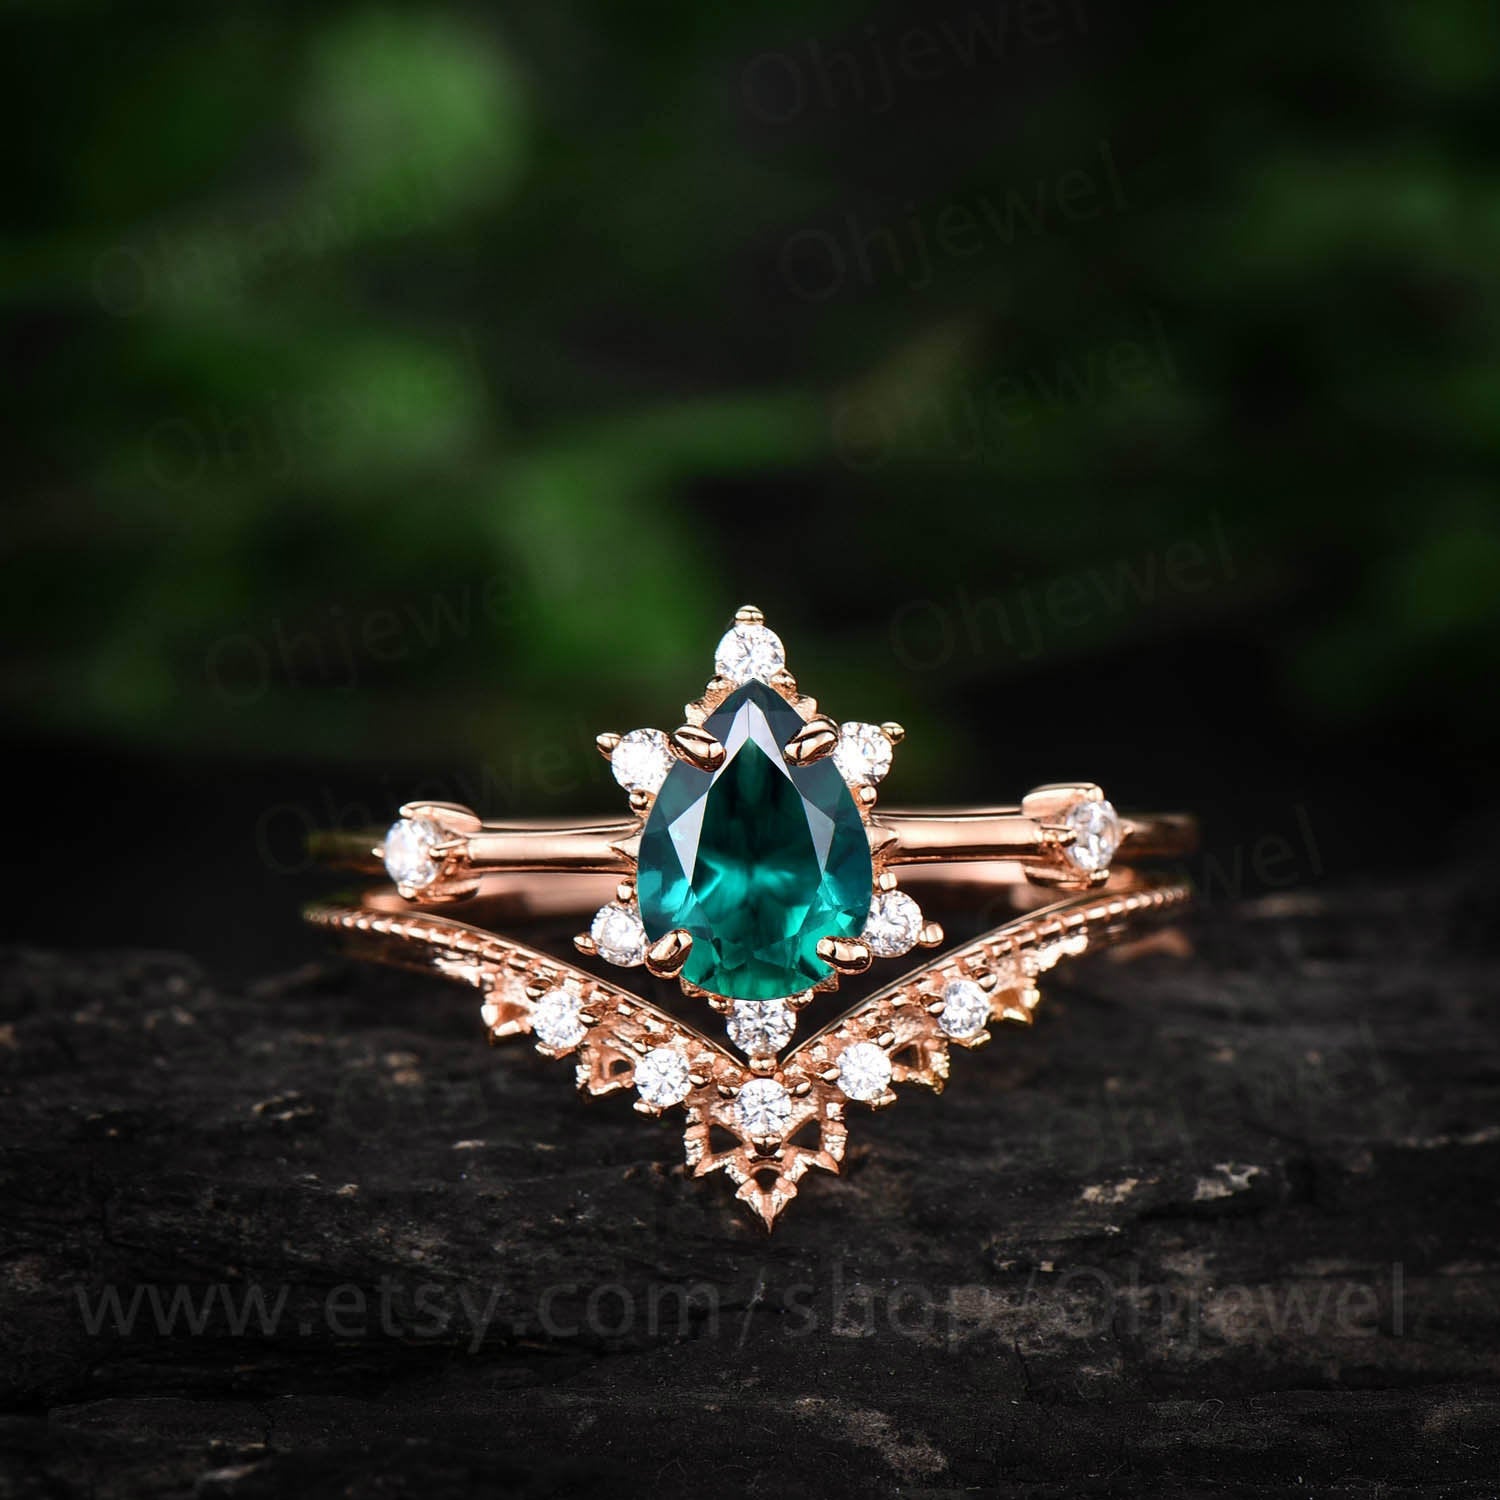 2 Carat Princess Cut Moissanite Engagement Ring Set Rose Gold Accent Diamond